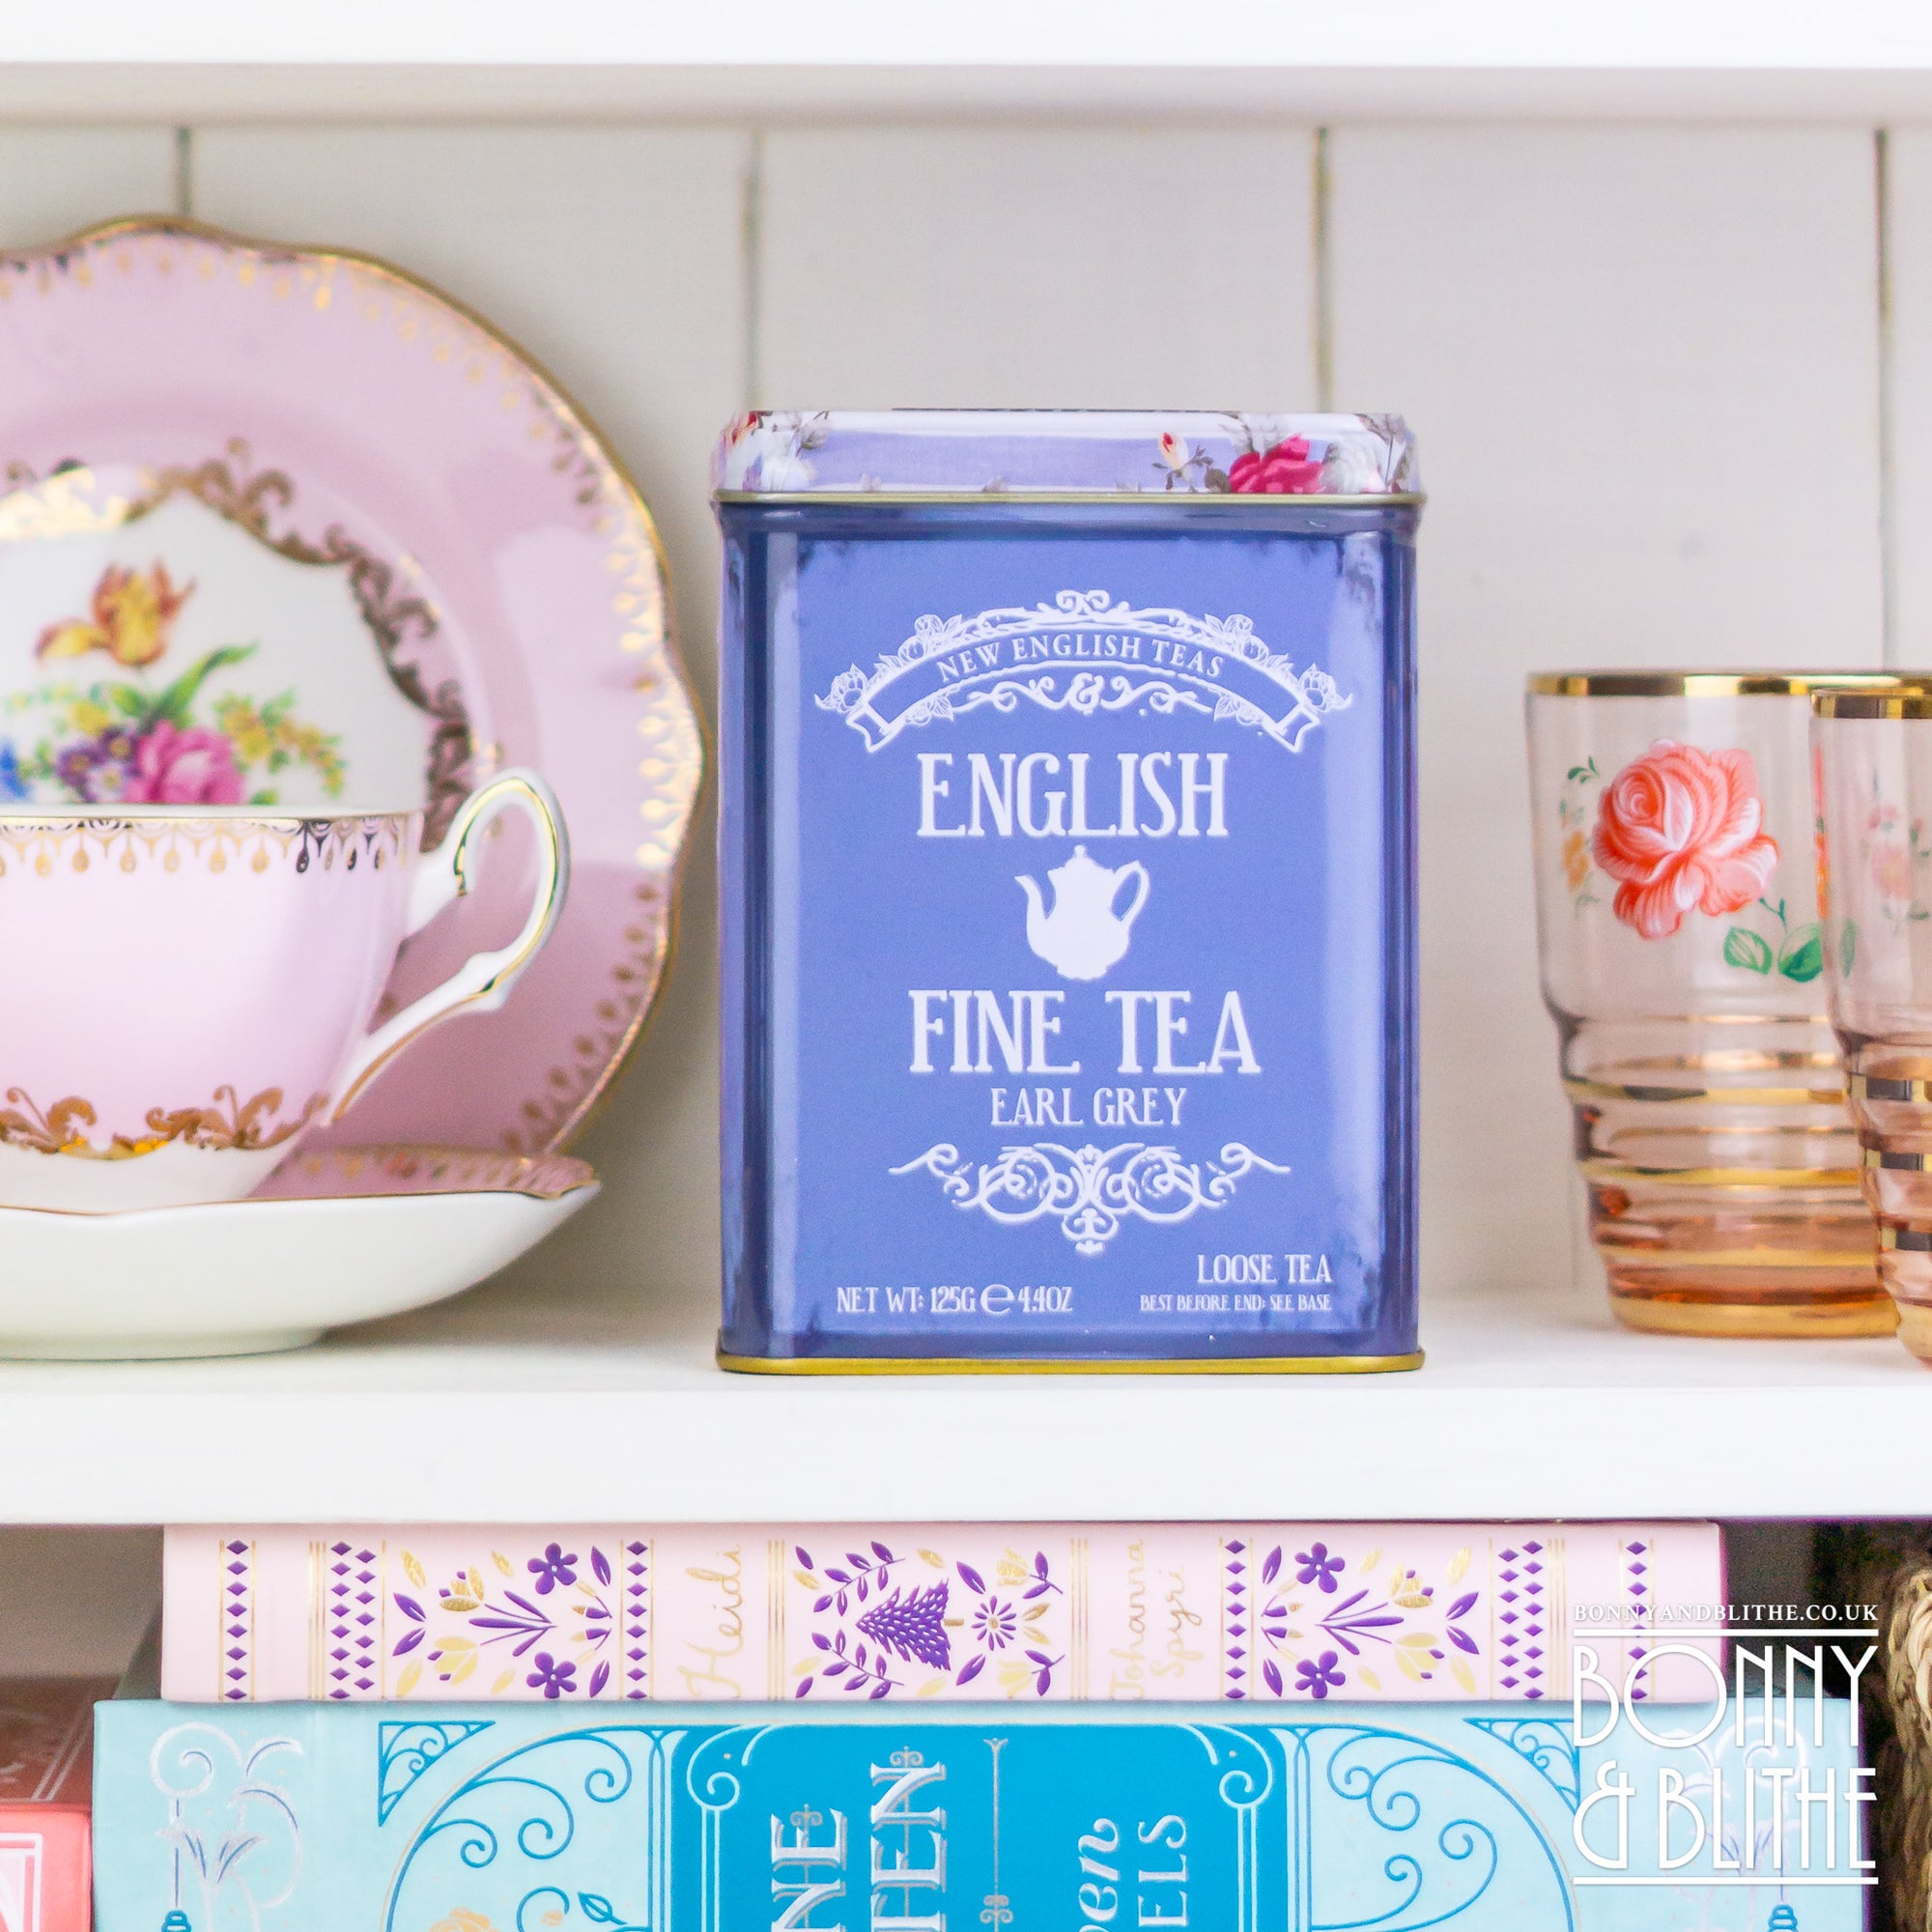 English Fine Tea Tin - Loose Leaf Earl Grey